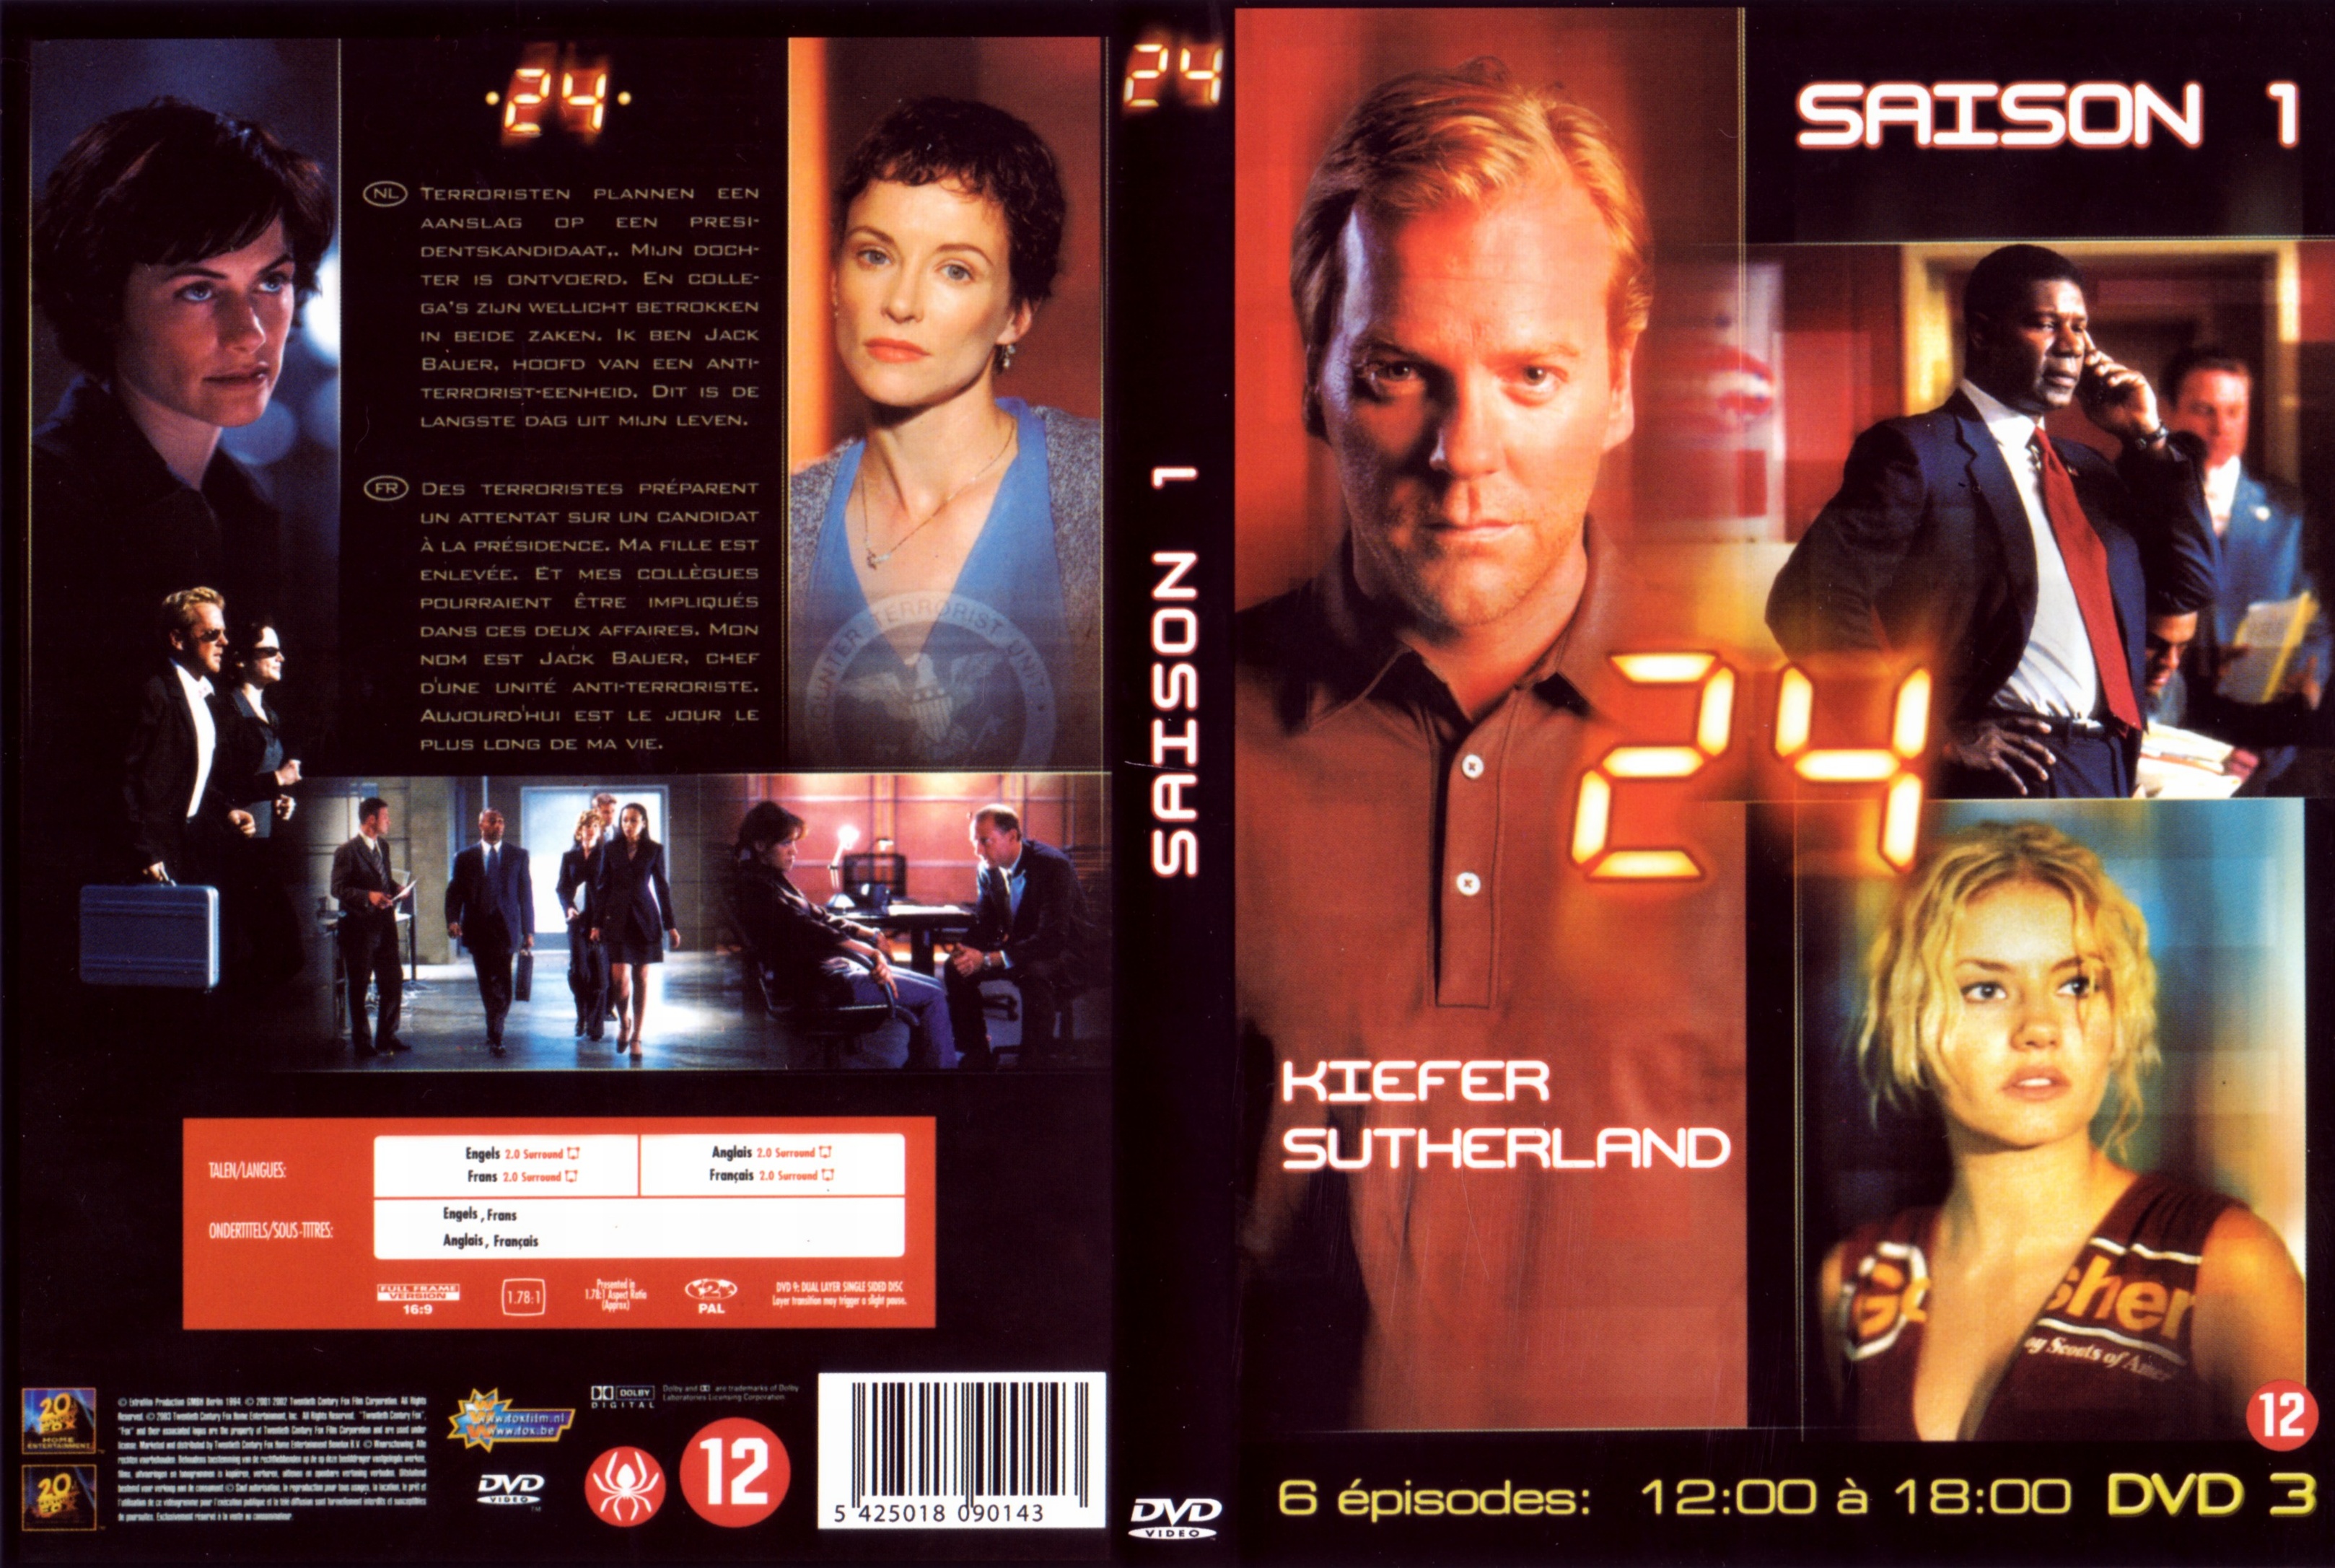 Jaquette DVD 24 heures chrono Saison 1 dvd 3 v2